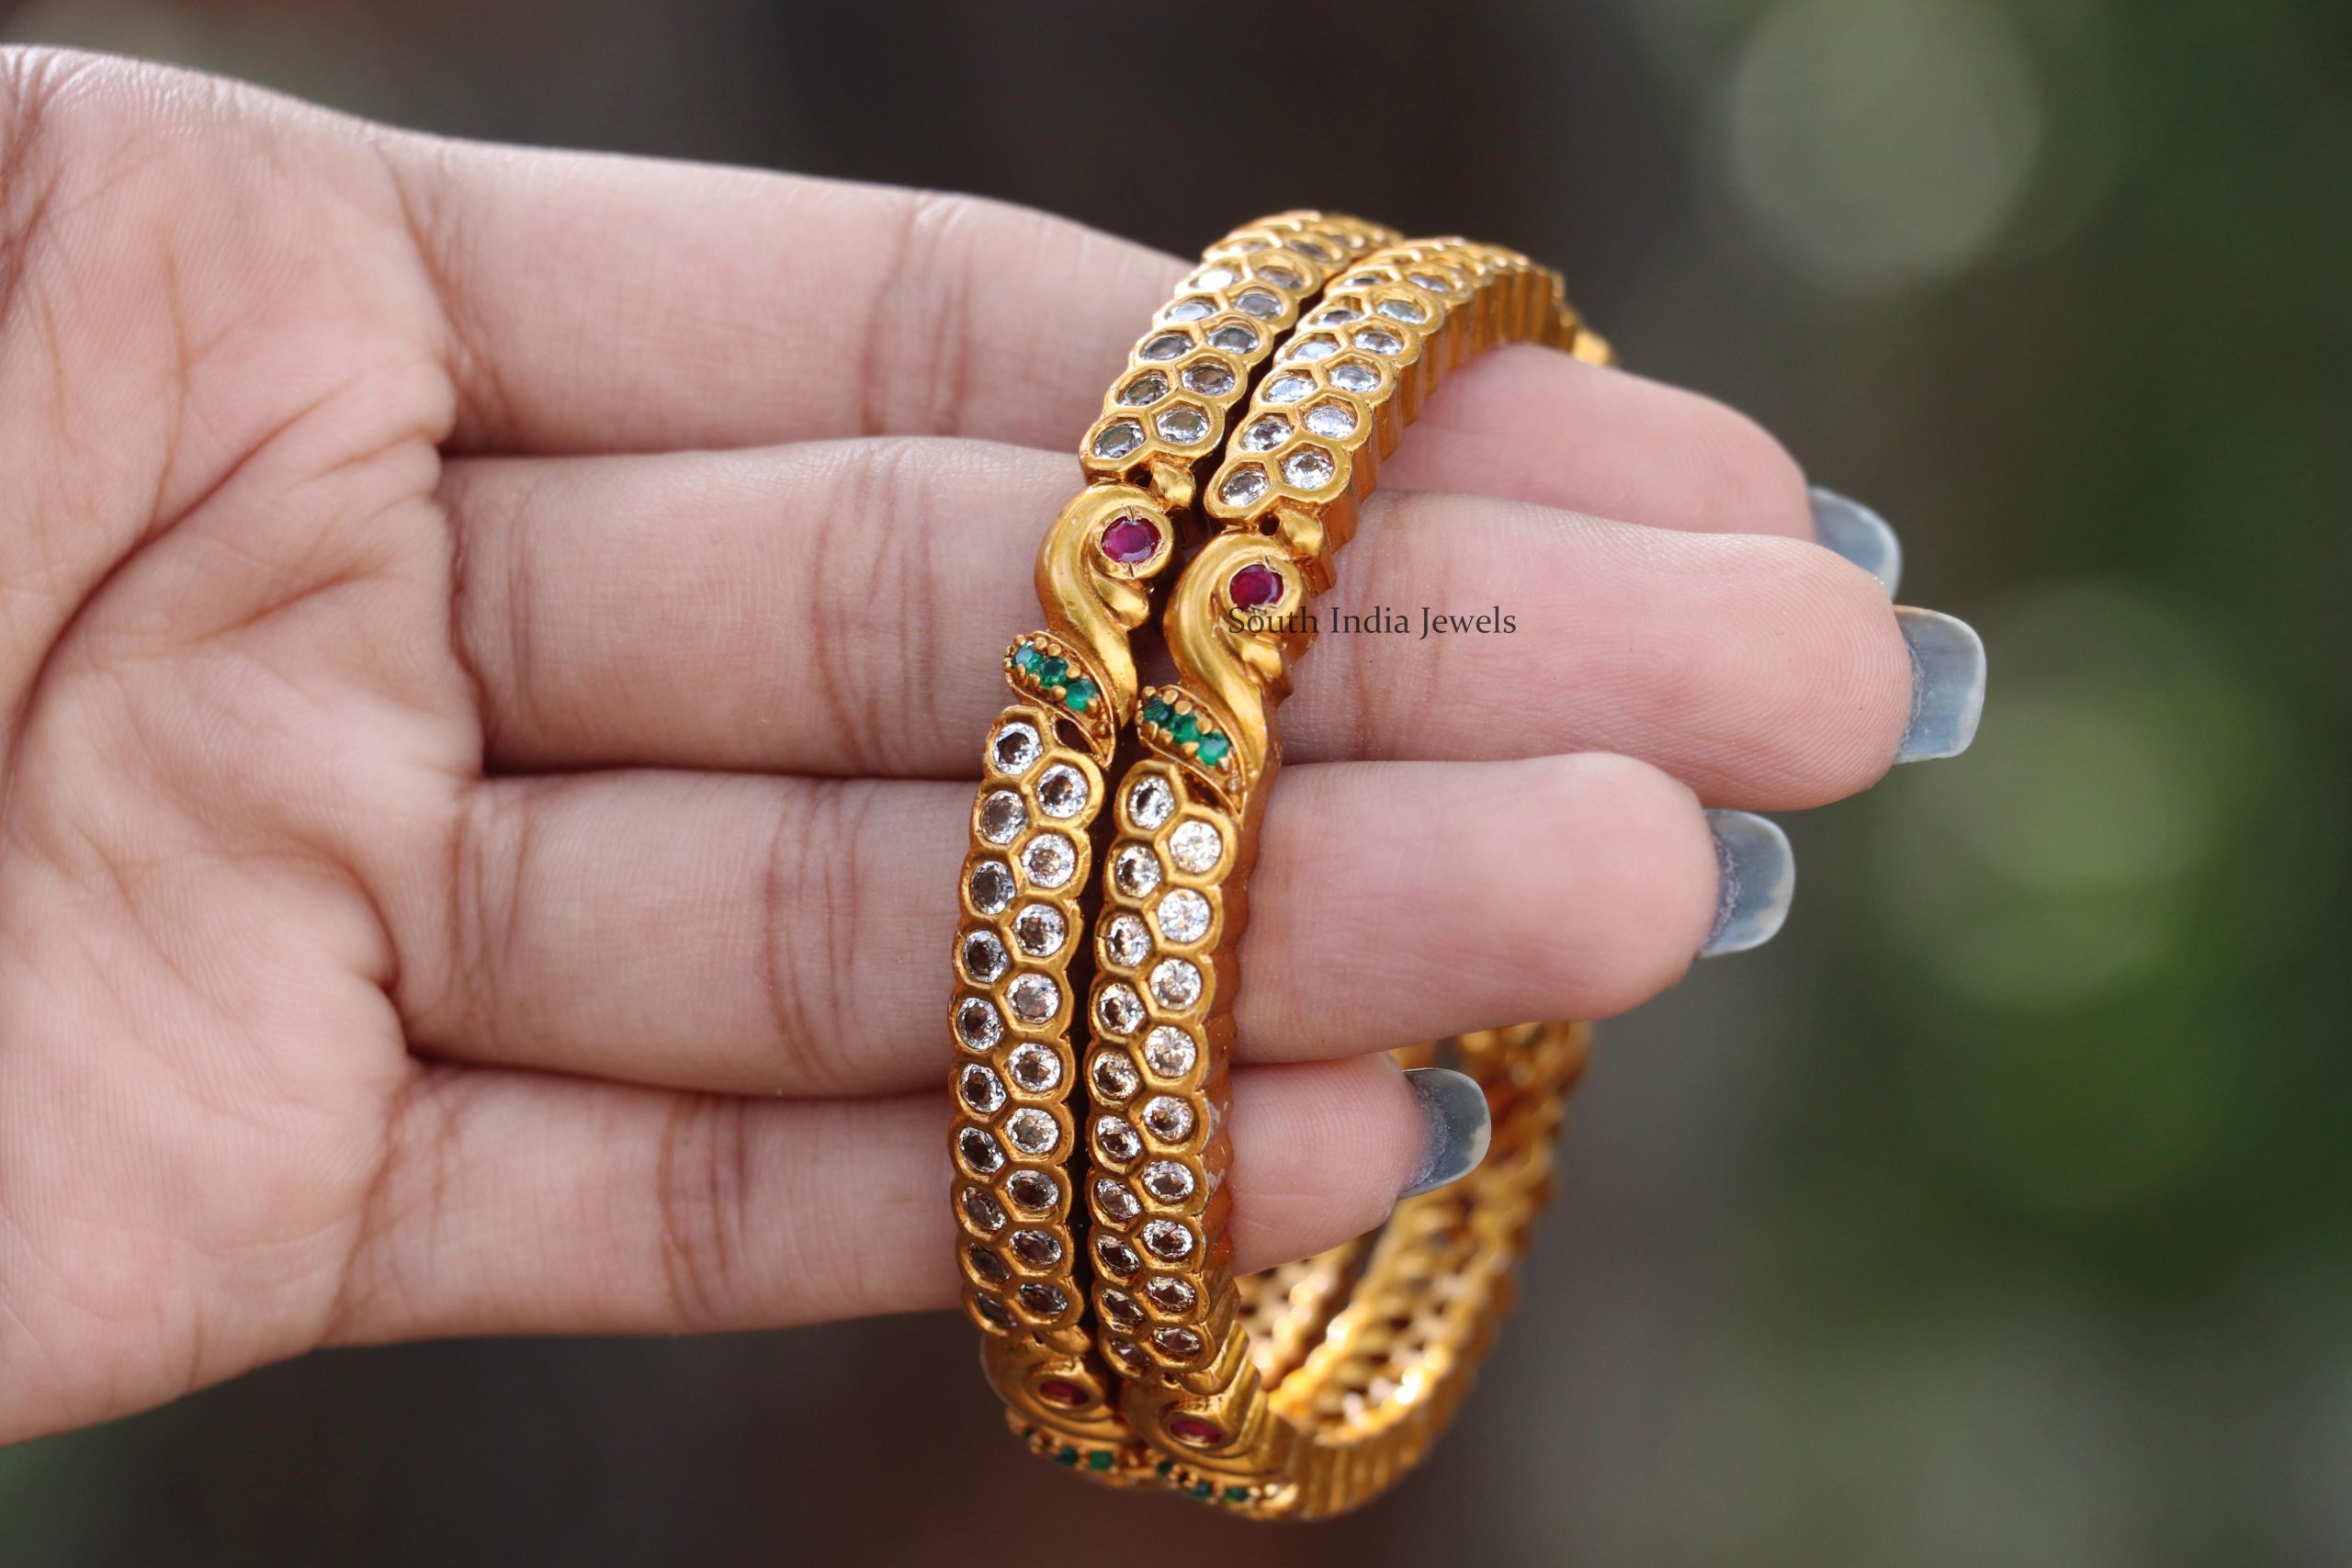 Gold Polish Simple Plain Bangles - South India Jewels